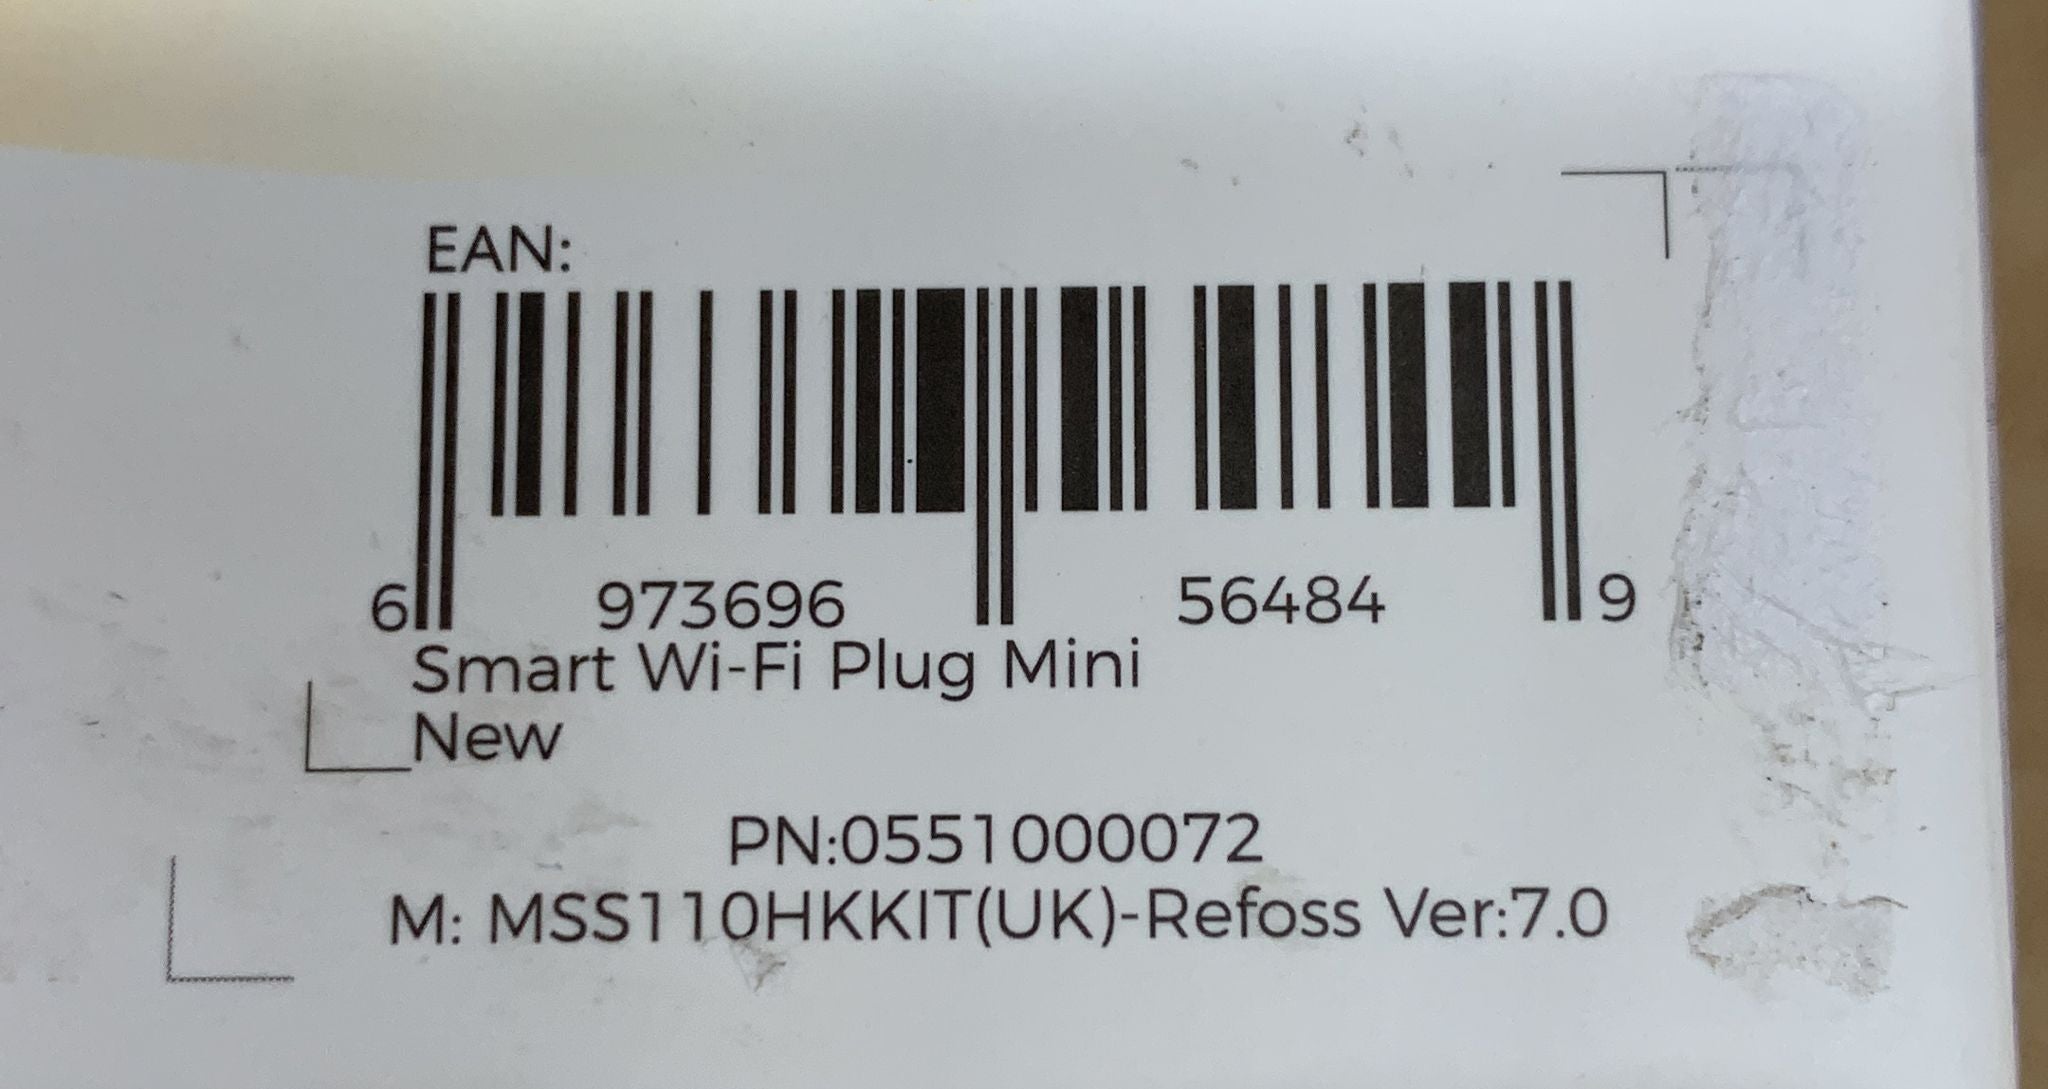 Smart Plug Works with Alexa, Apple HomeKit Siri, Google Home - Refoss Wifi Plug Alexa Smart Sockets Support App Remote Control, Voice Control, Timer, Offline Control, 13A, No Hub Required - 2 Pack 4849